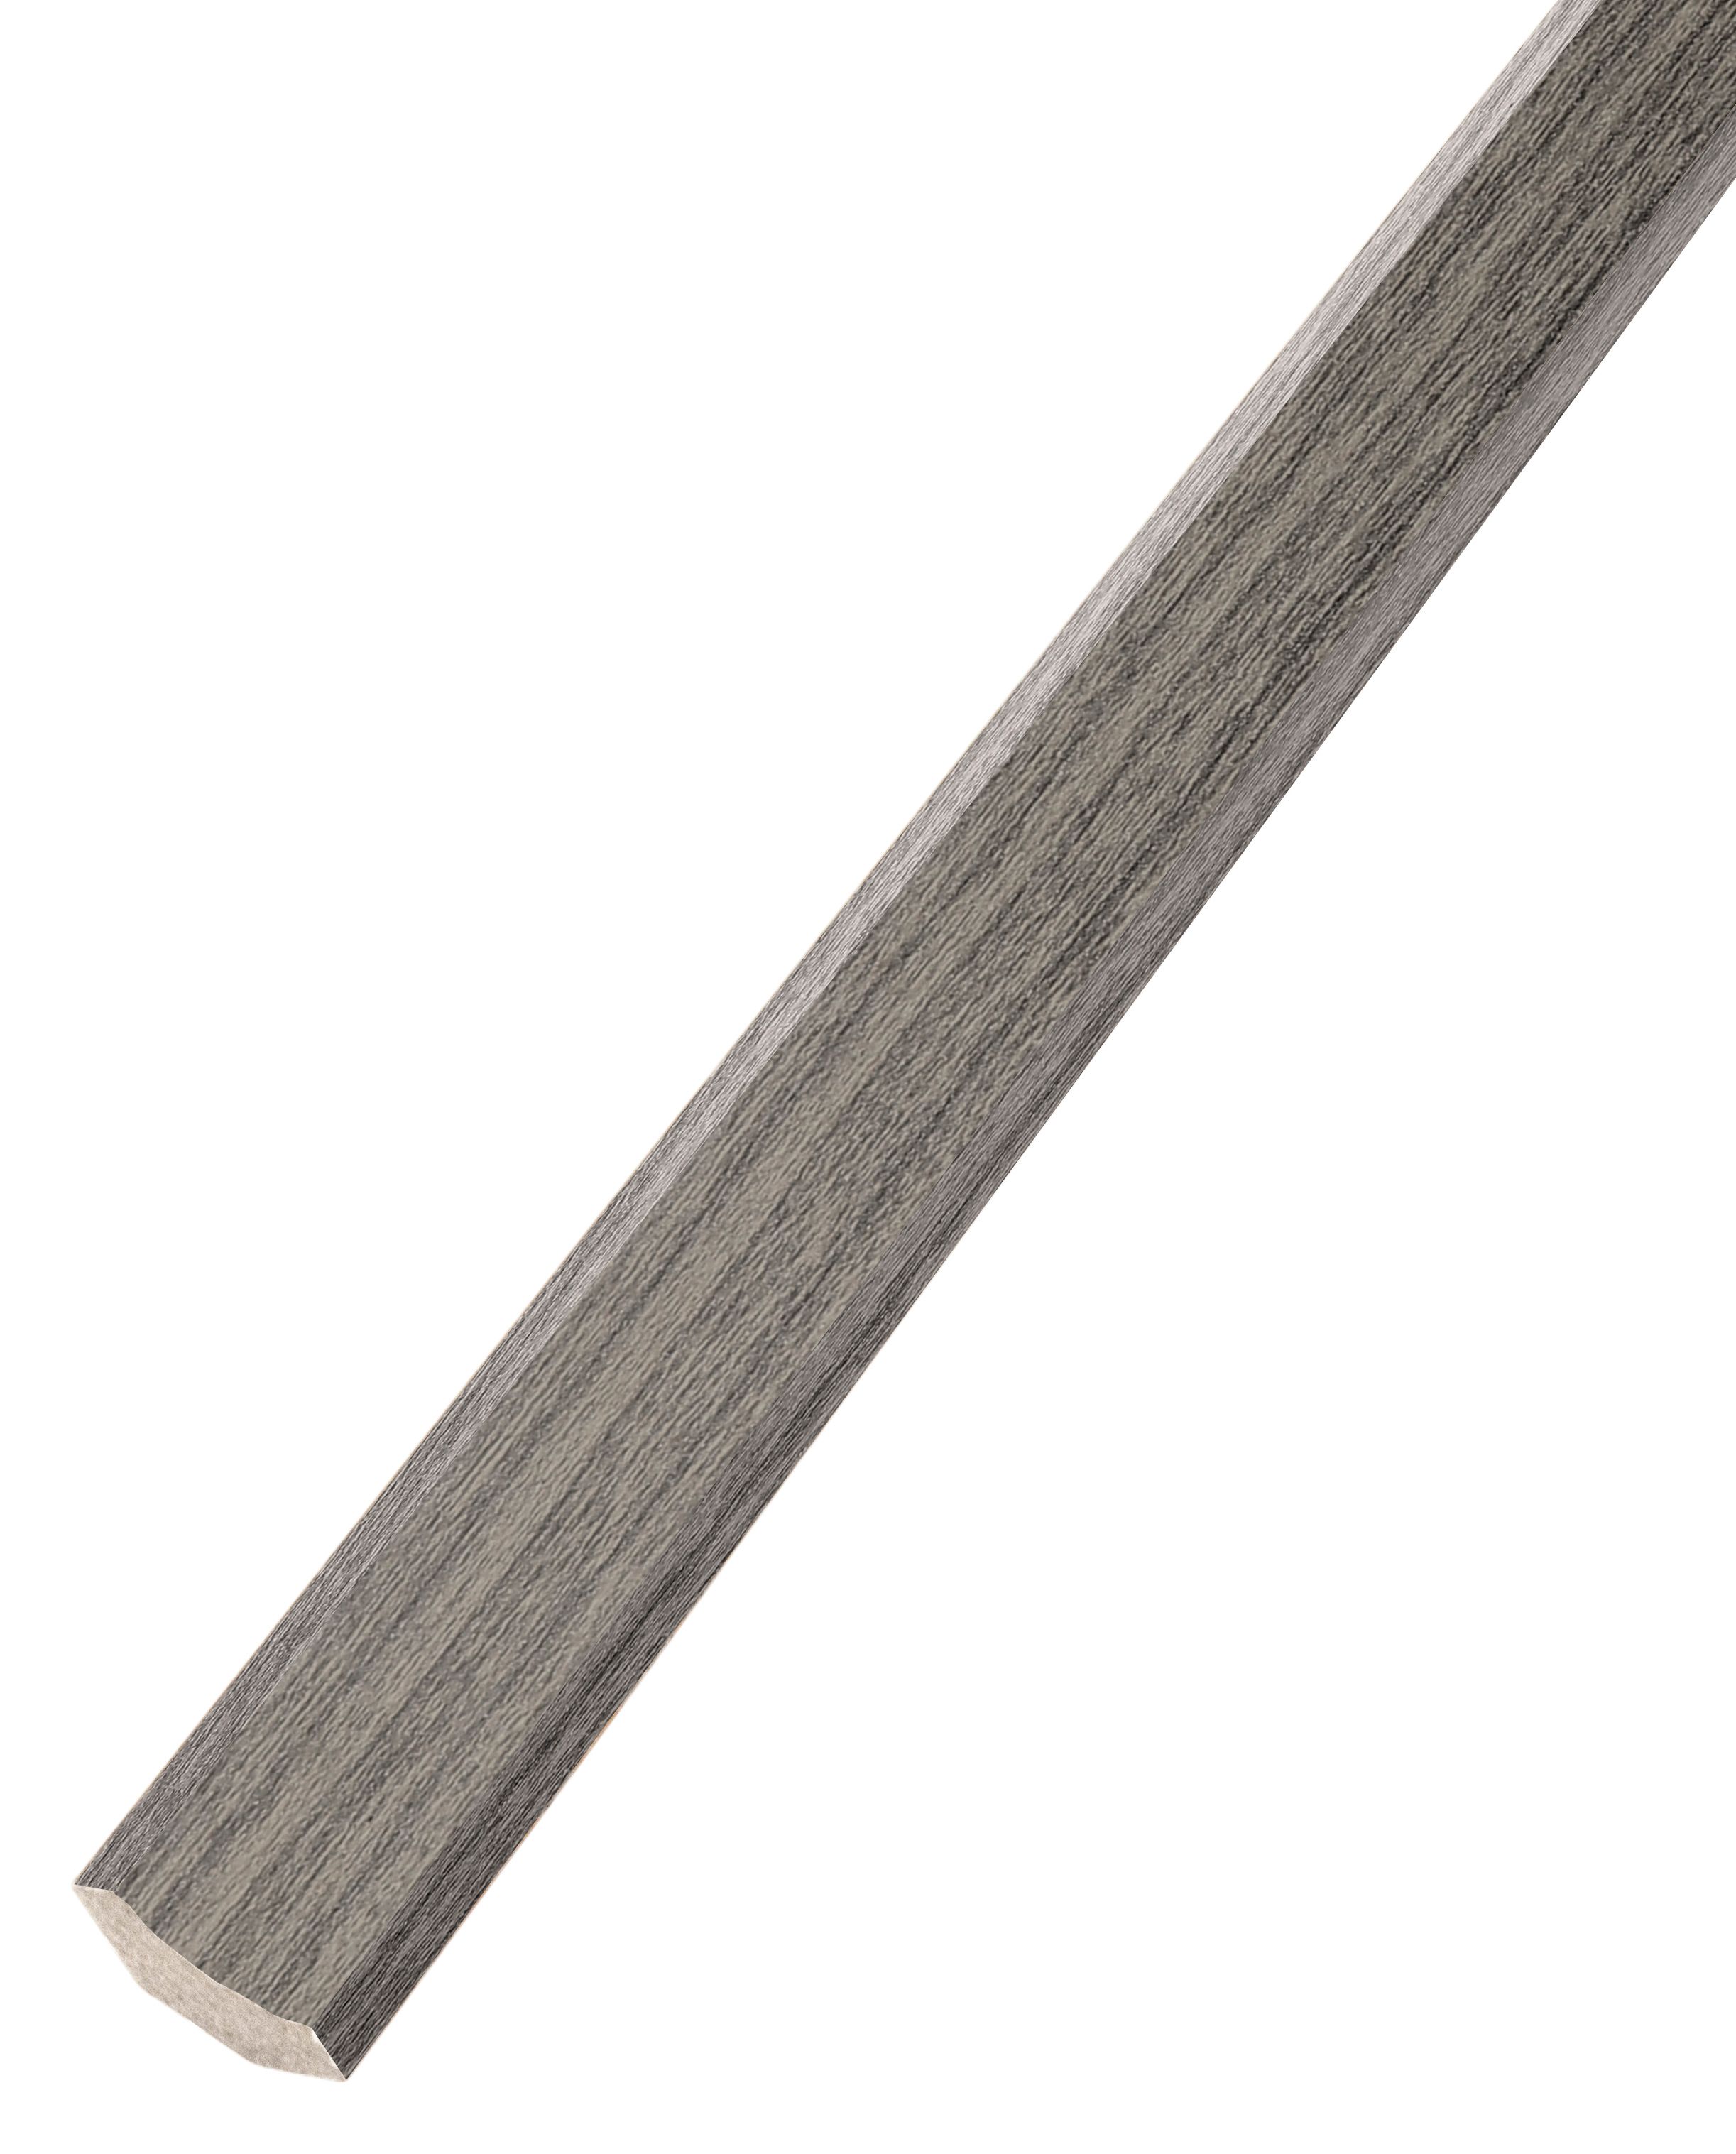 Image of Elderwood Medium Grey Oak Flooring Trim - 2m